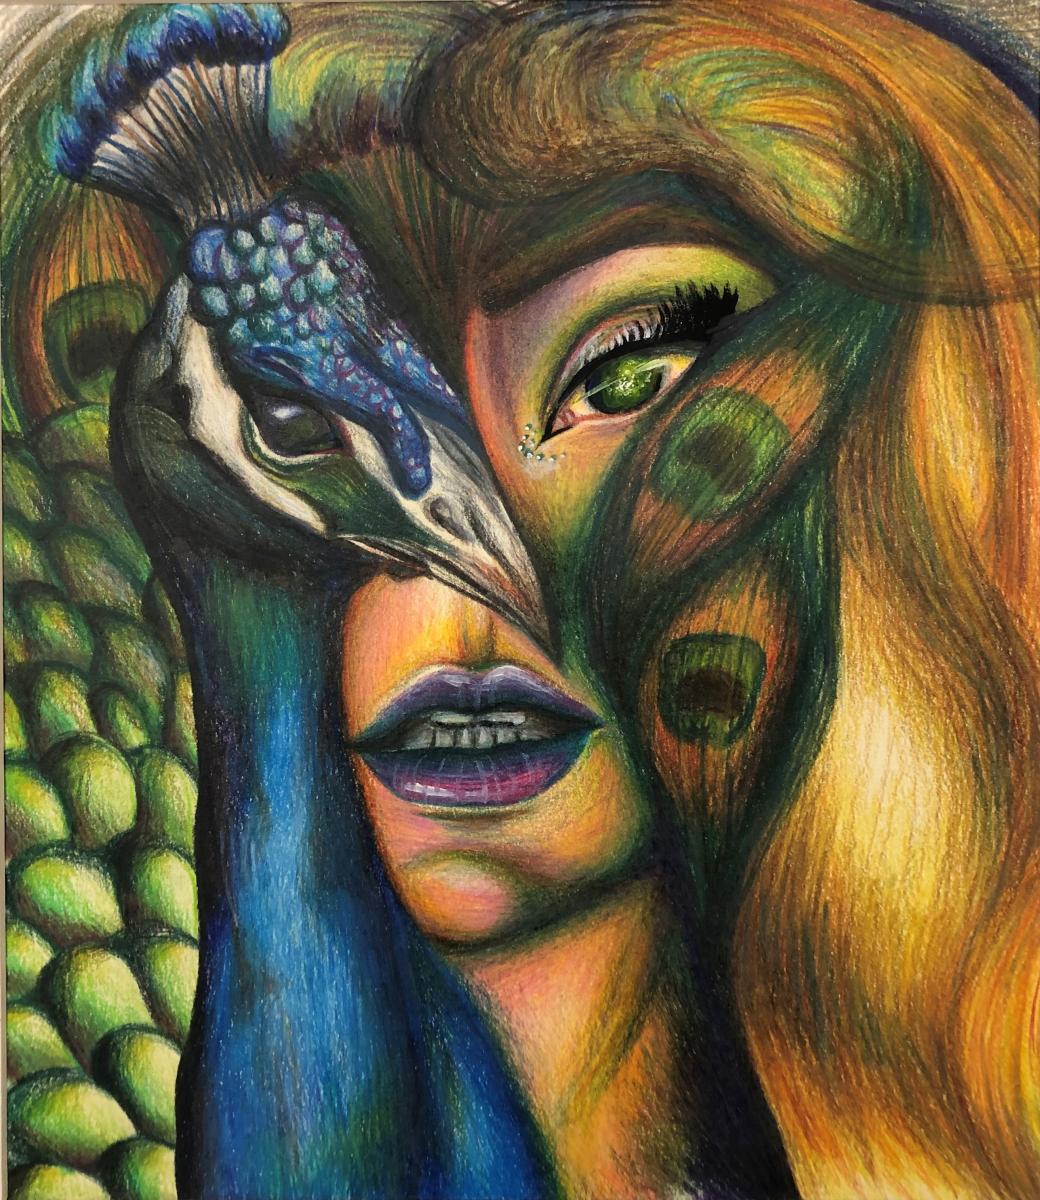 Etta Forry, "Peacock Eyes"